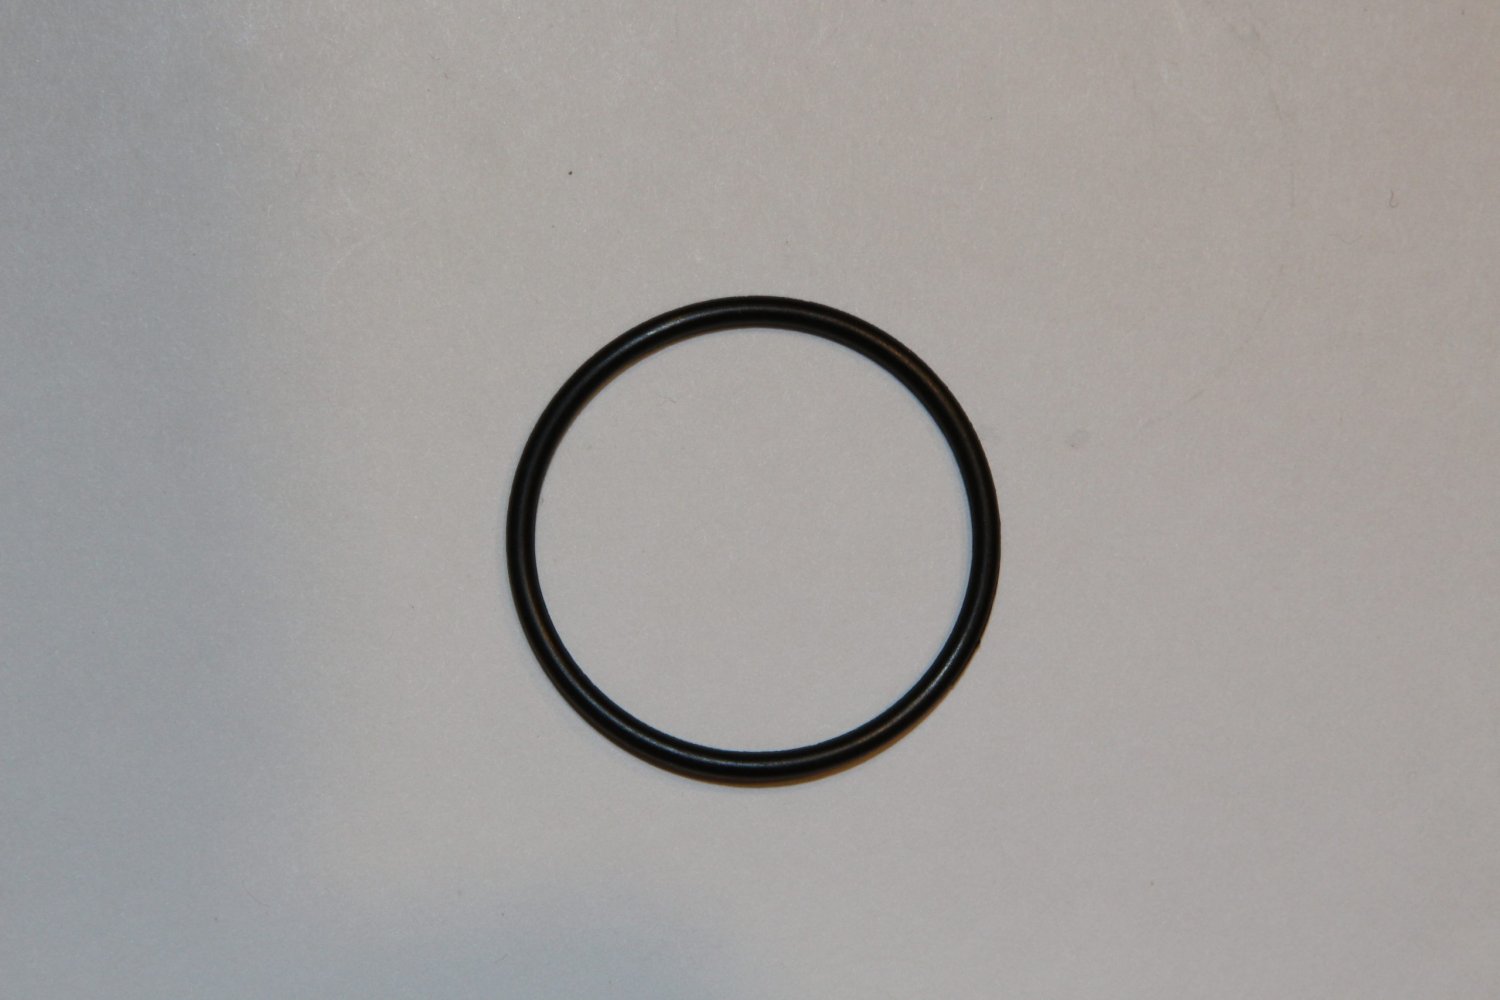 Кольцо уплотнительное WSS О-ринг, 28.3х1.78 мм, AS024 уплотнительное кольцо wss круглого сечения о ринг 5 0x2 0 a подходит для вилок talas i ii iii lower shaft 2005pu